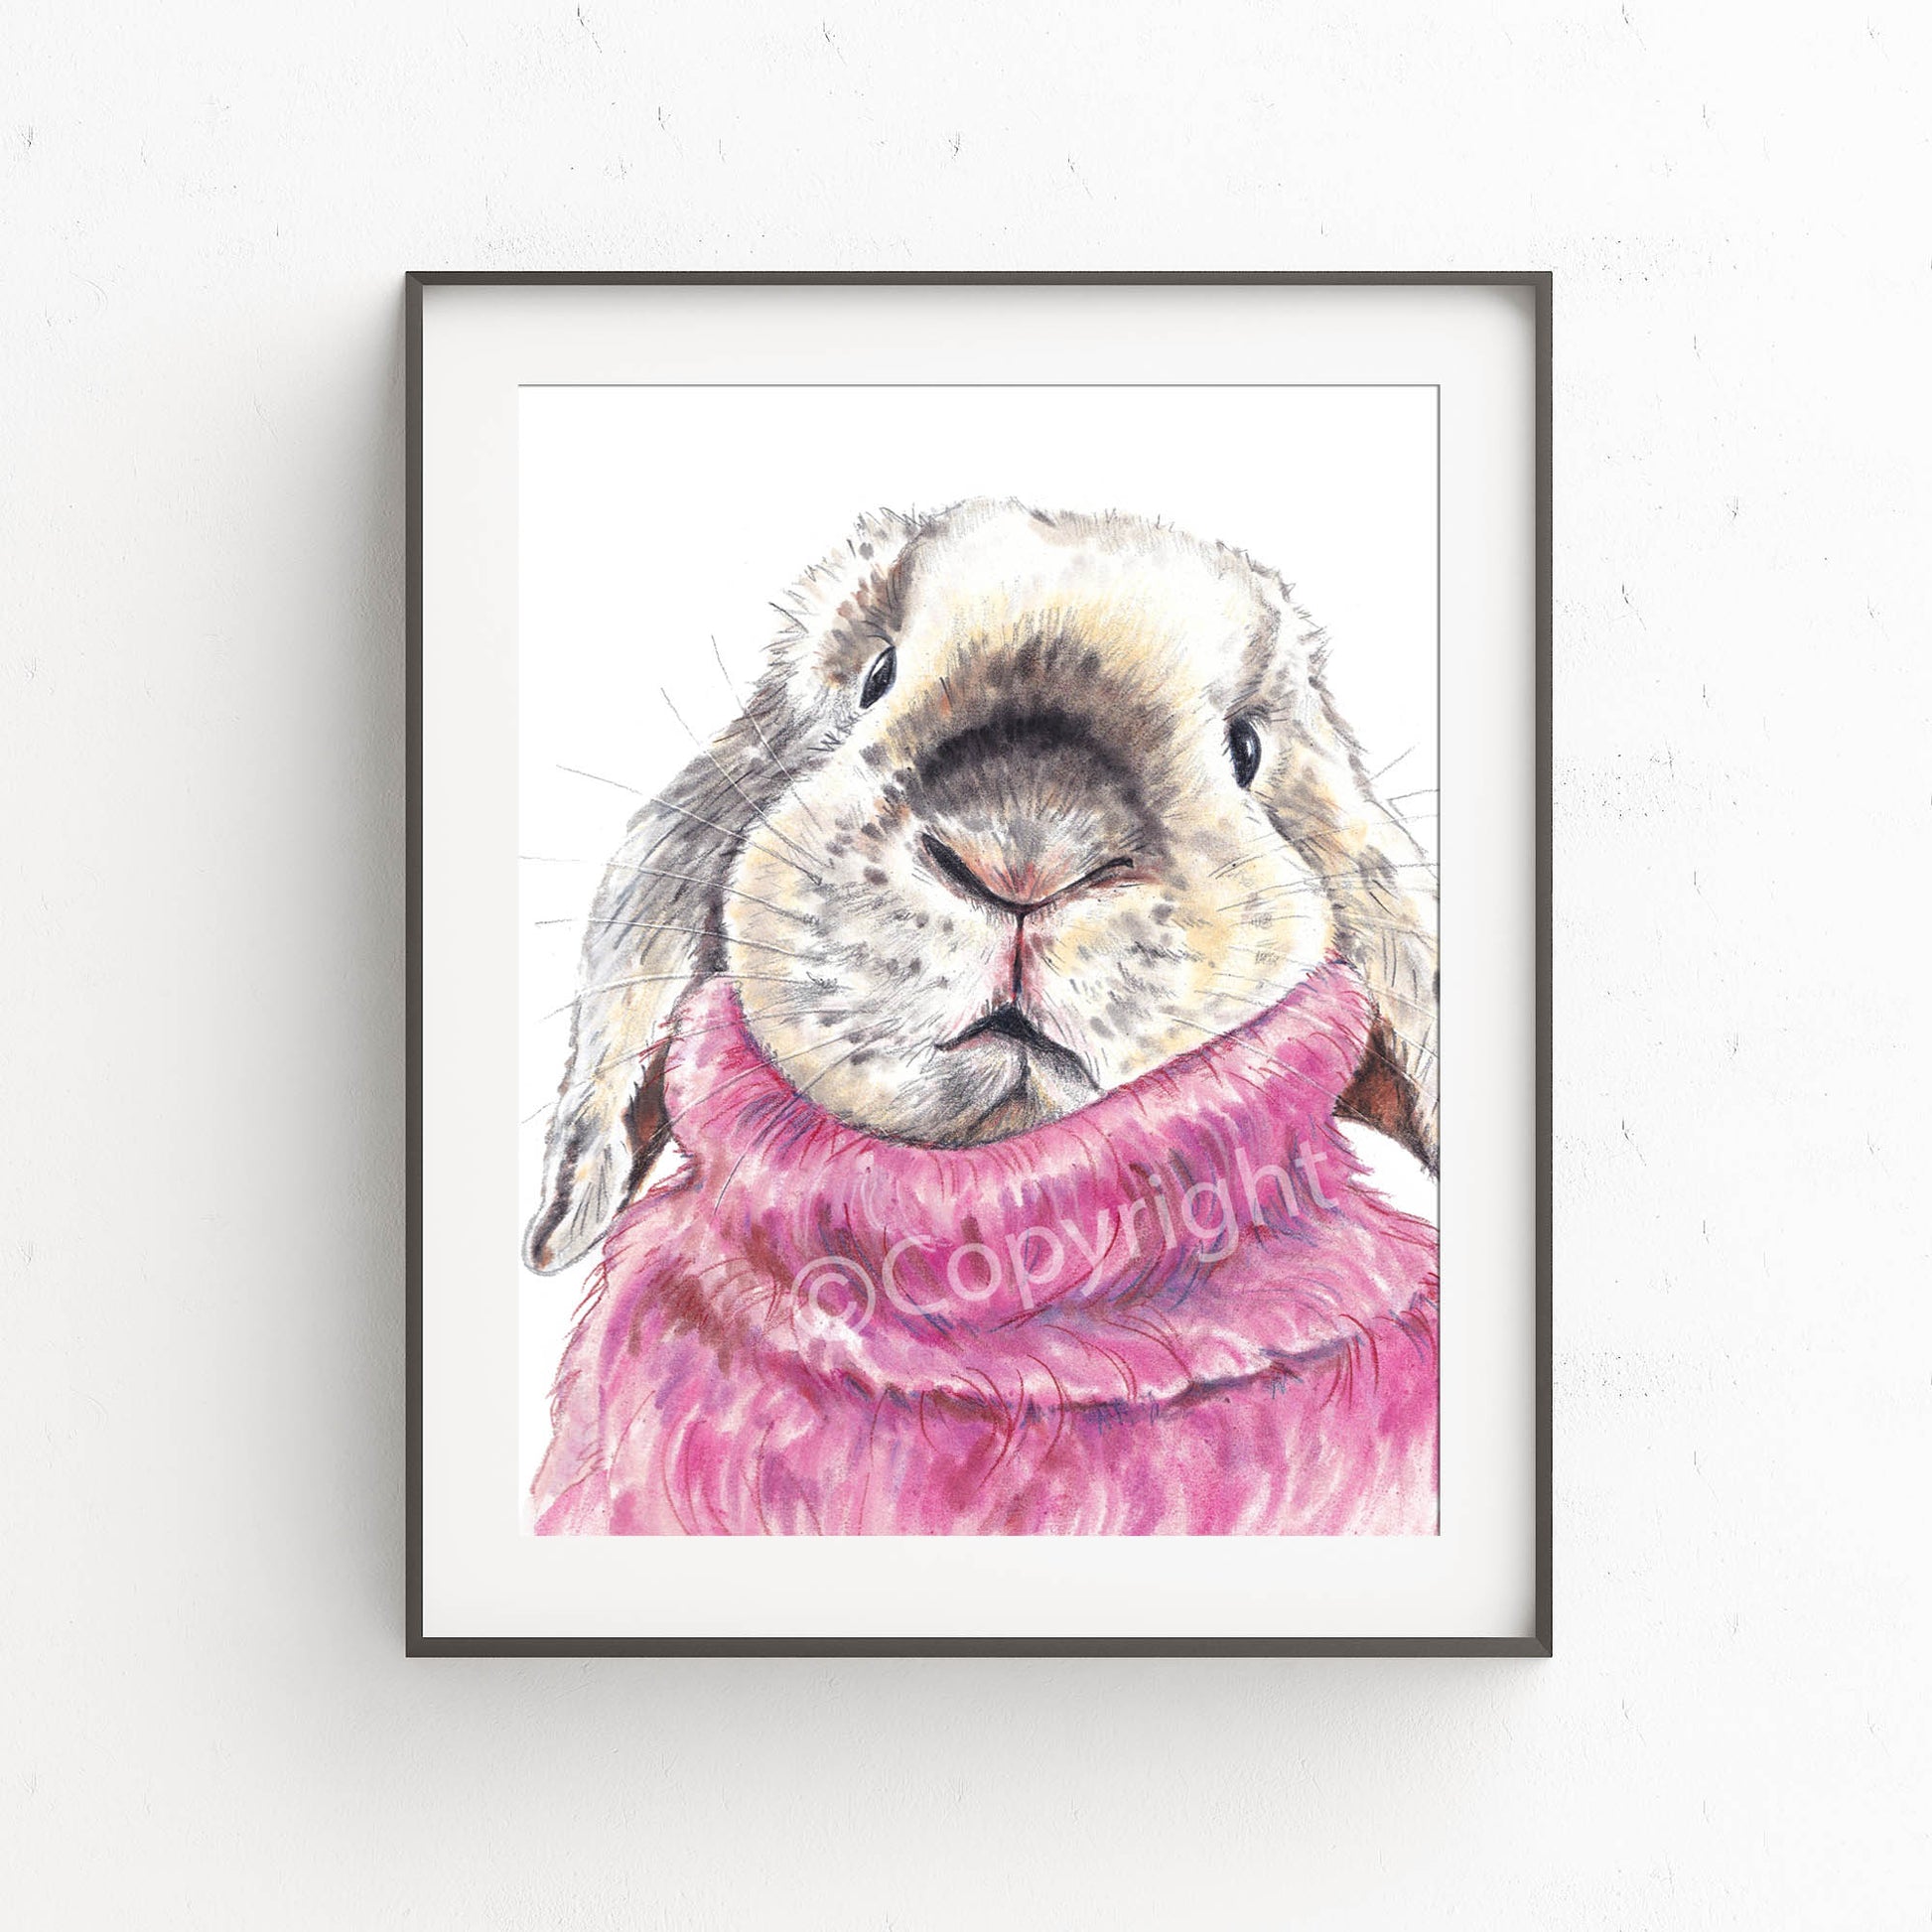 Pastel drawing of a lop eared bunny rabbit wearing a pink mohair turtleneck sweater. Art by Deidre Wicks